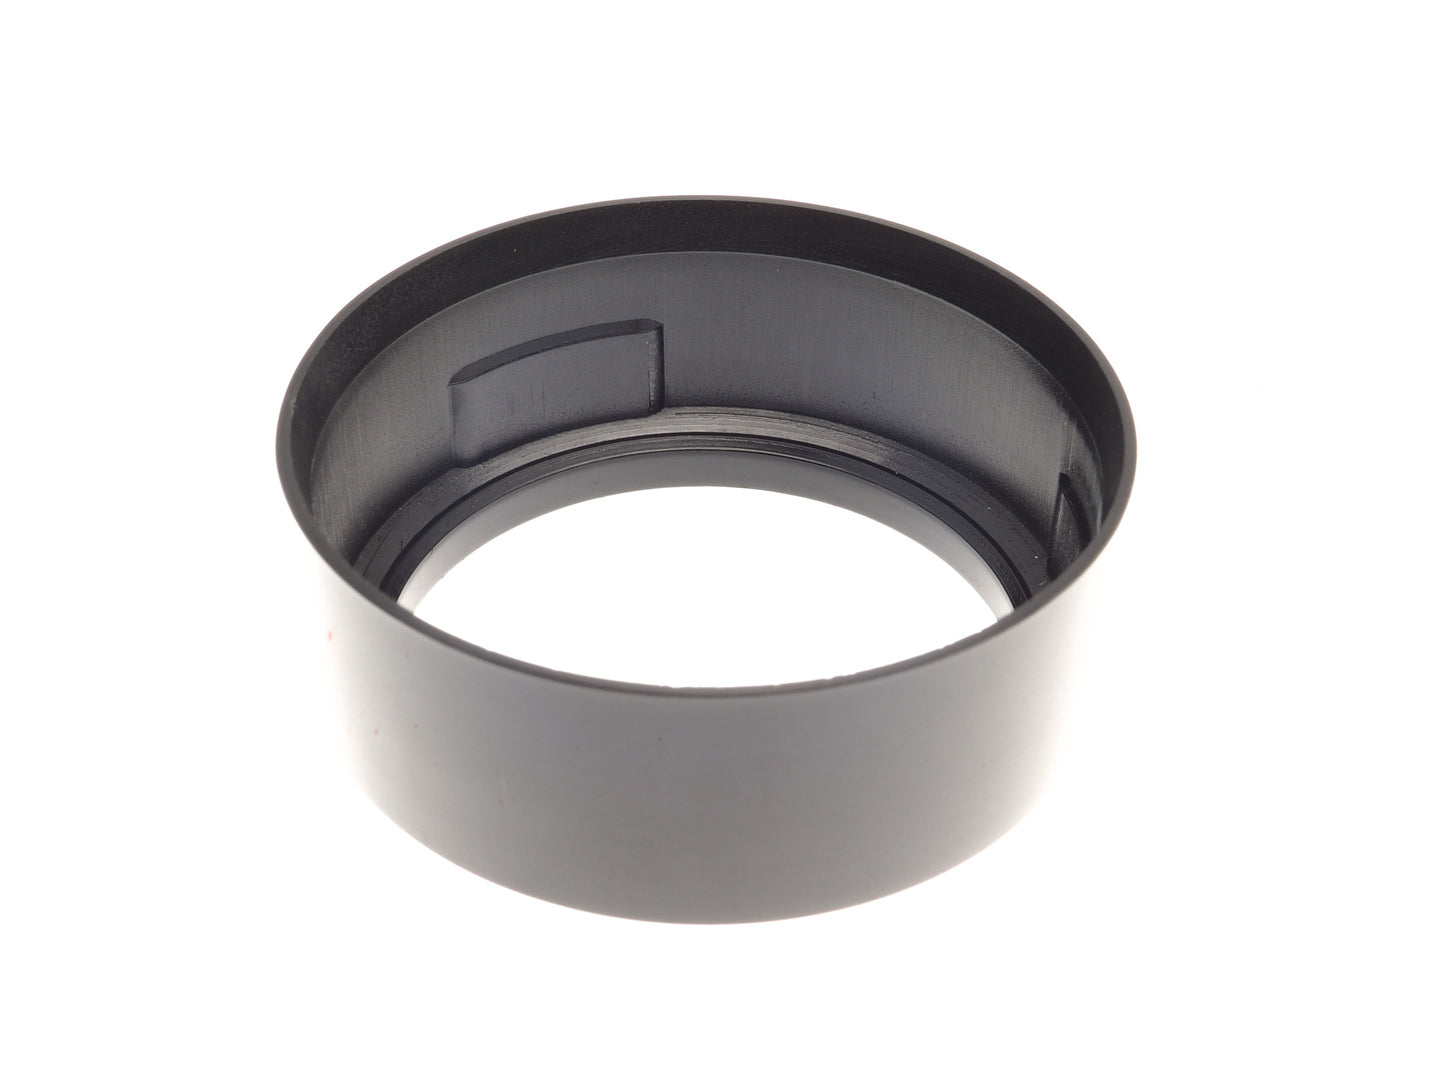 Topcon 55mm Lens hood for 53mm f2/35mm f3.5 UV Topcor - Accessory